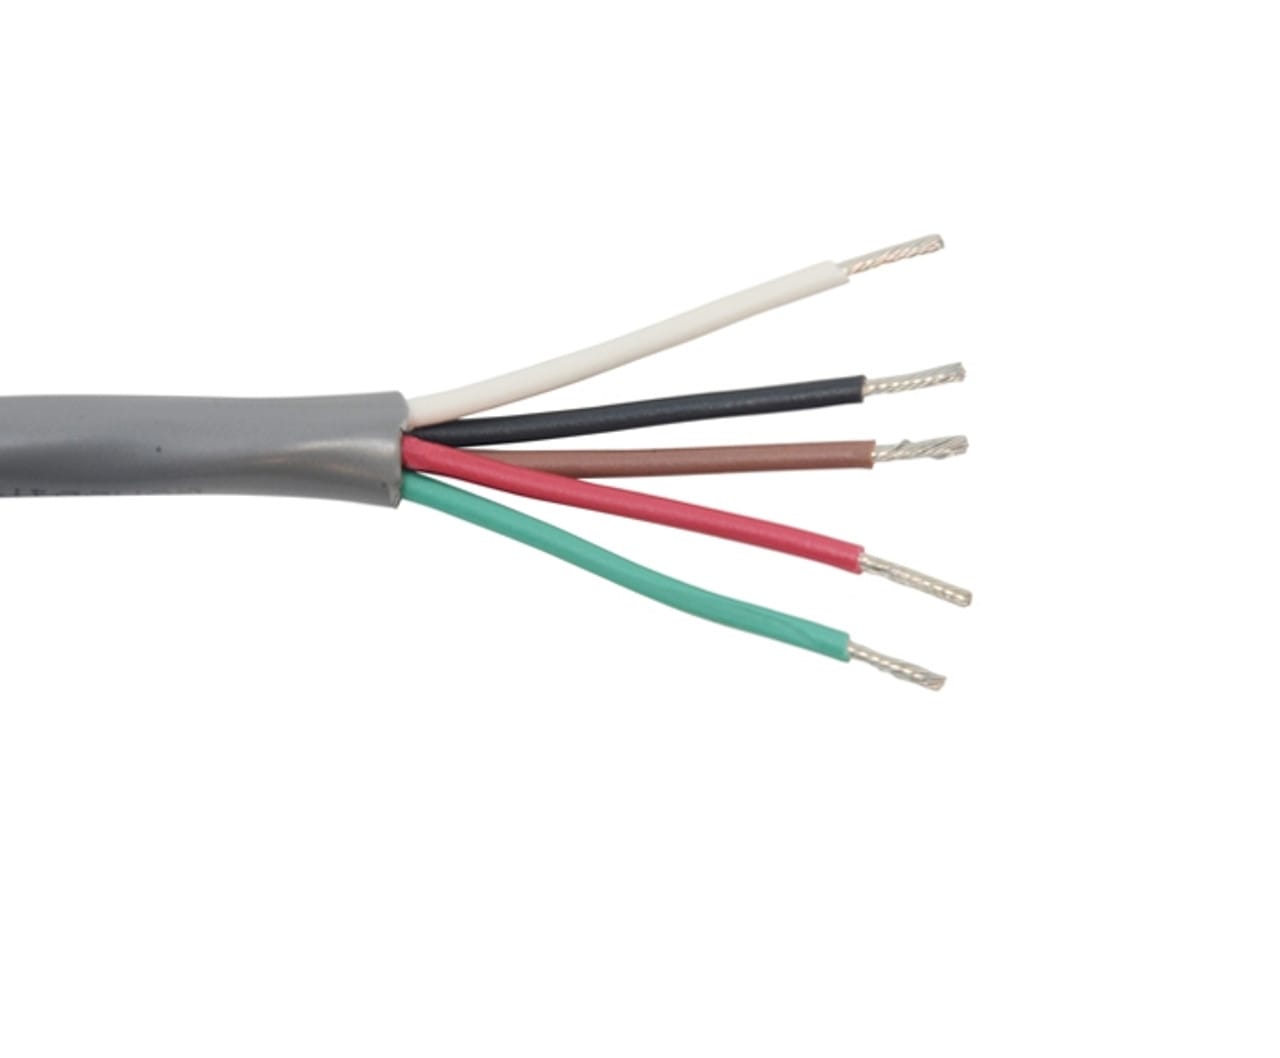 24V LED Strip Lights - 18 Gauge 2 Conductor Wire - LED Wire